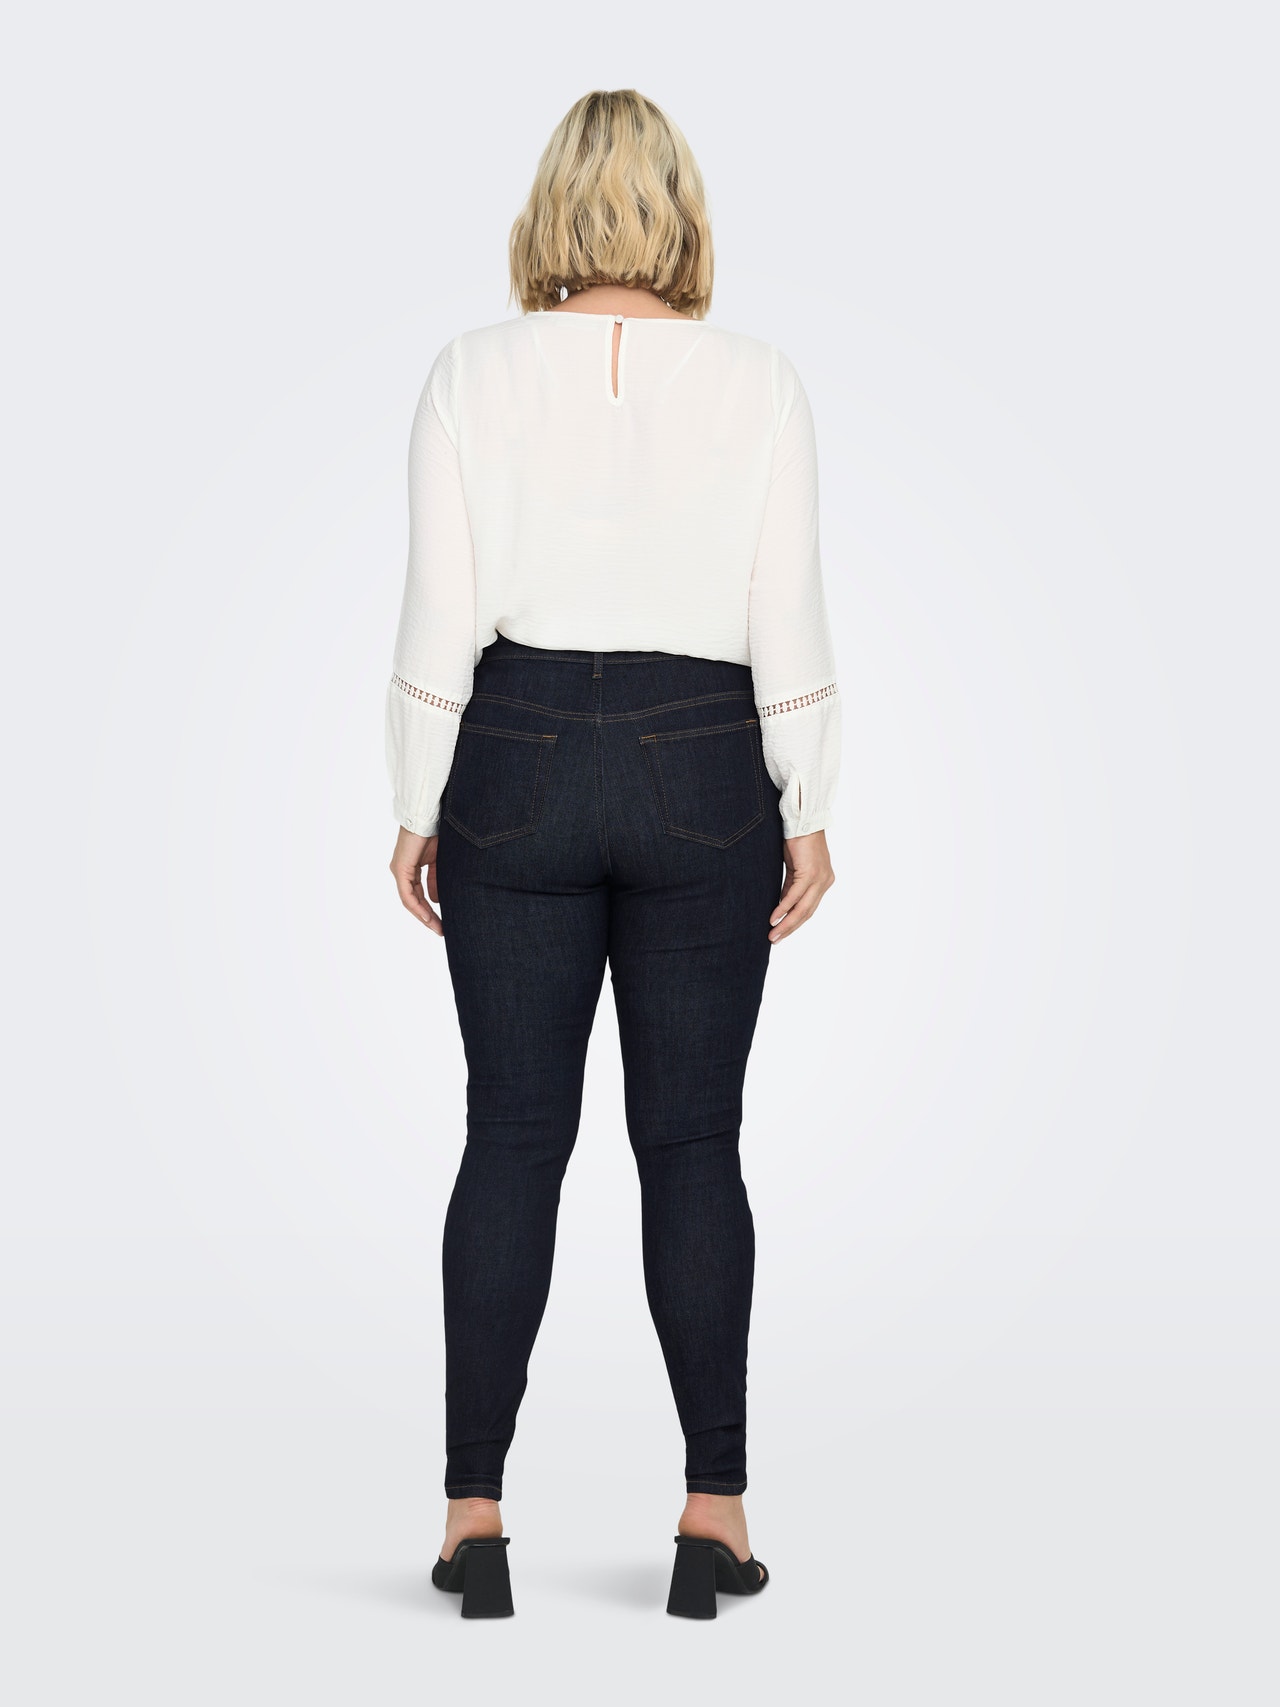 ONLY Skinny Fit Mid waist Jeans -Dark Blue Denim - 15280527